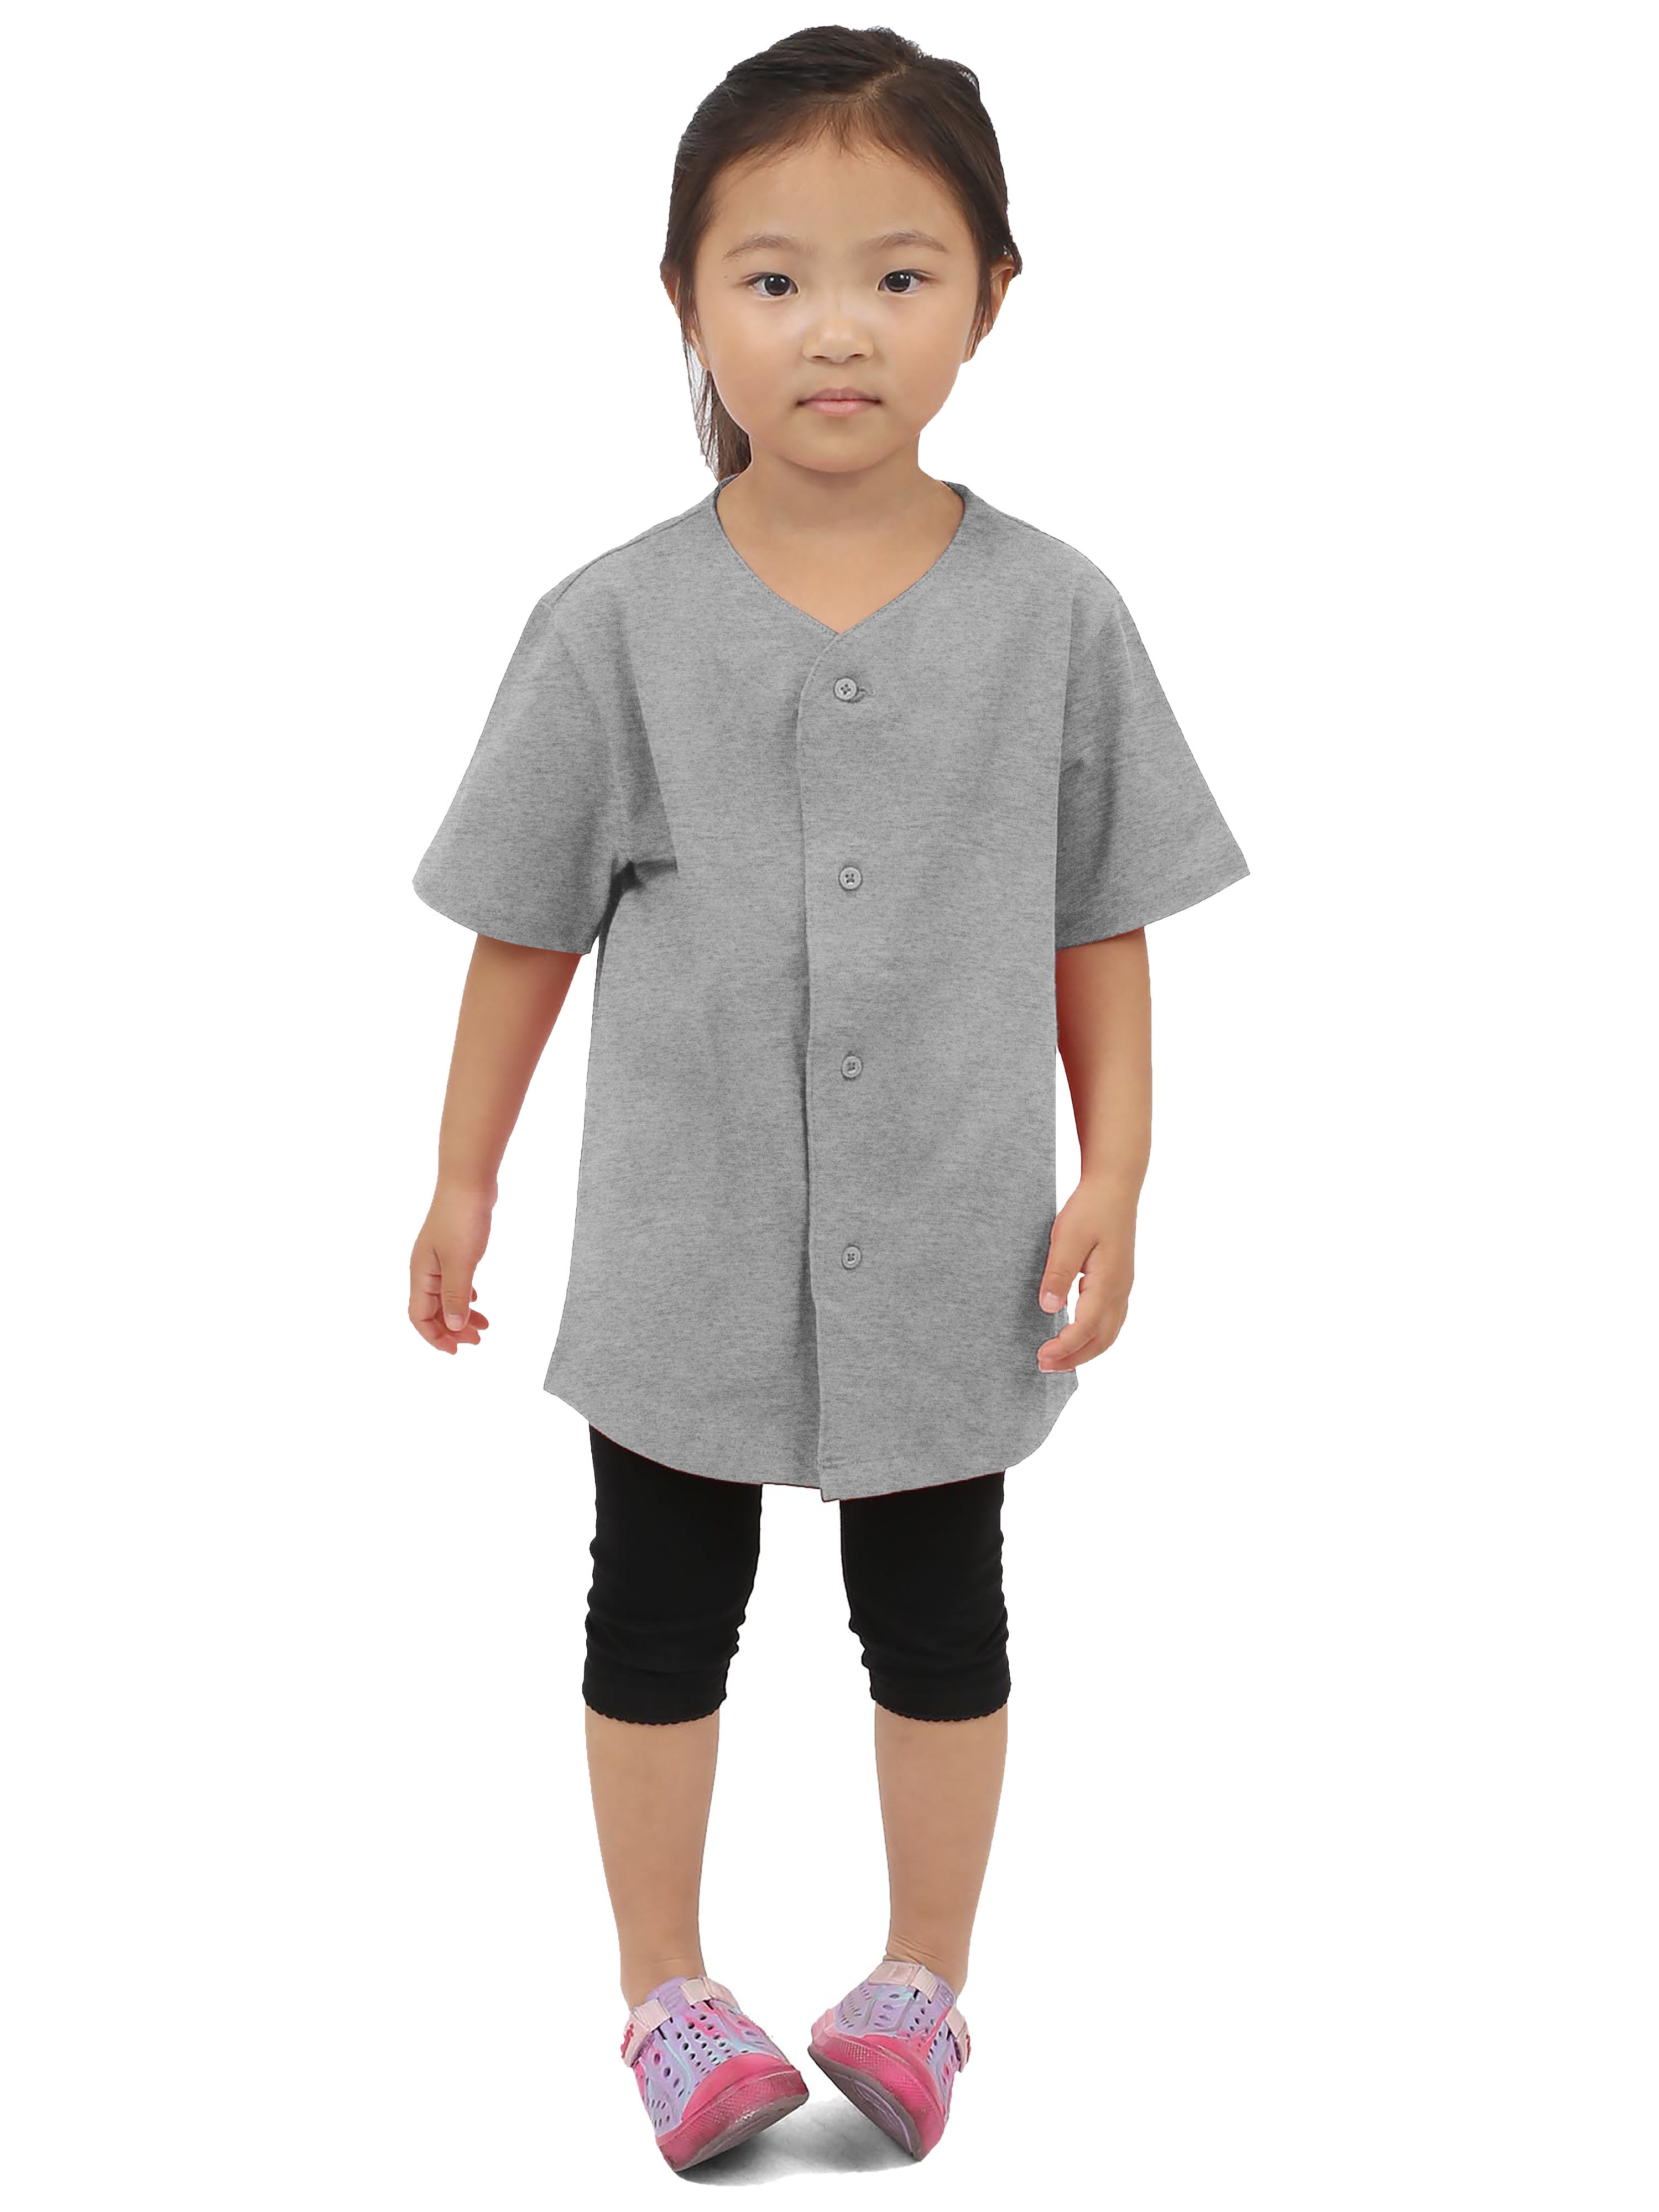 Shaka Wear Kids Premium Active Cotton Button Down Baseball Jersey Uniform XXS-XL 